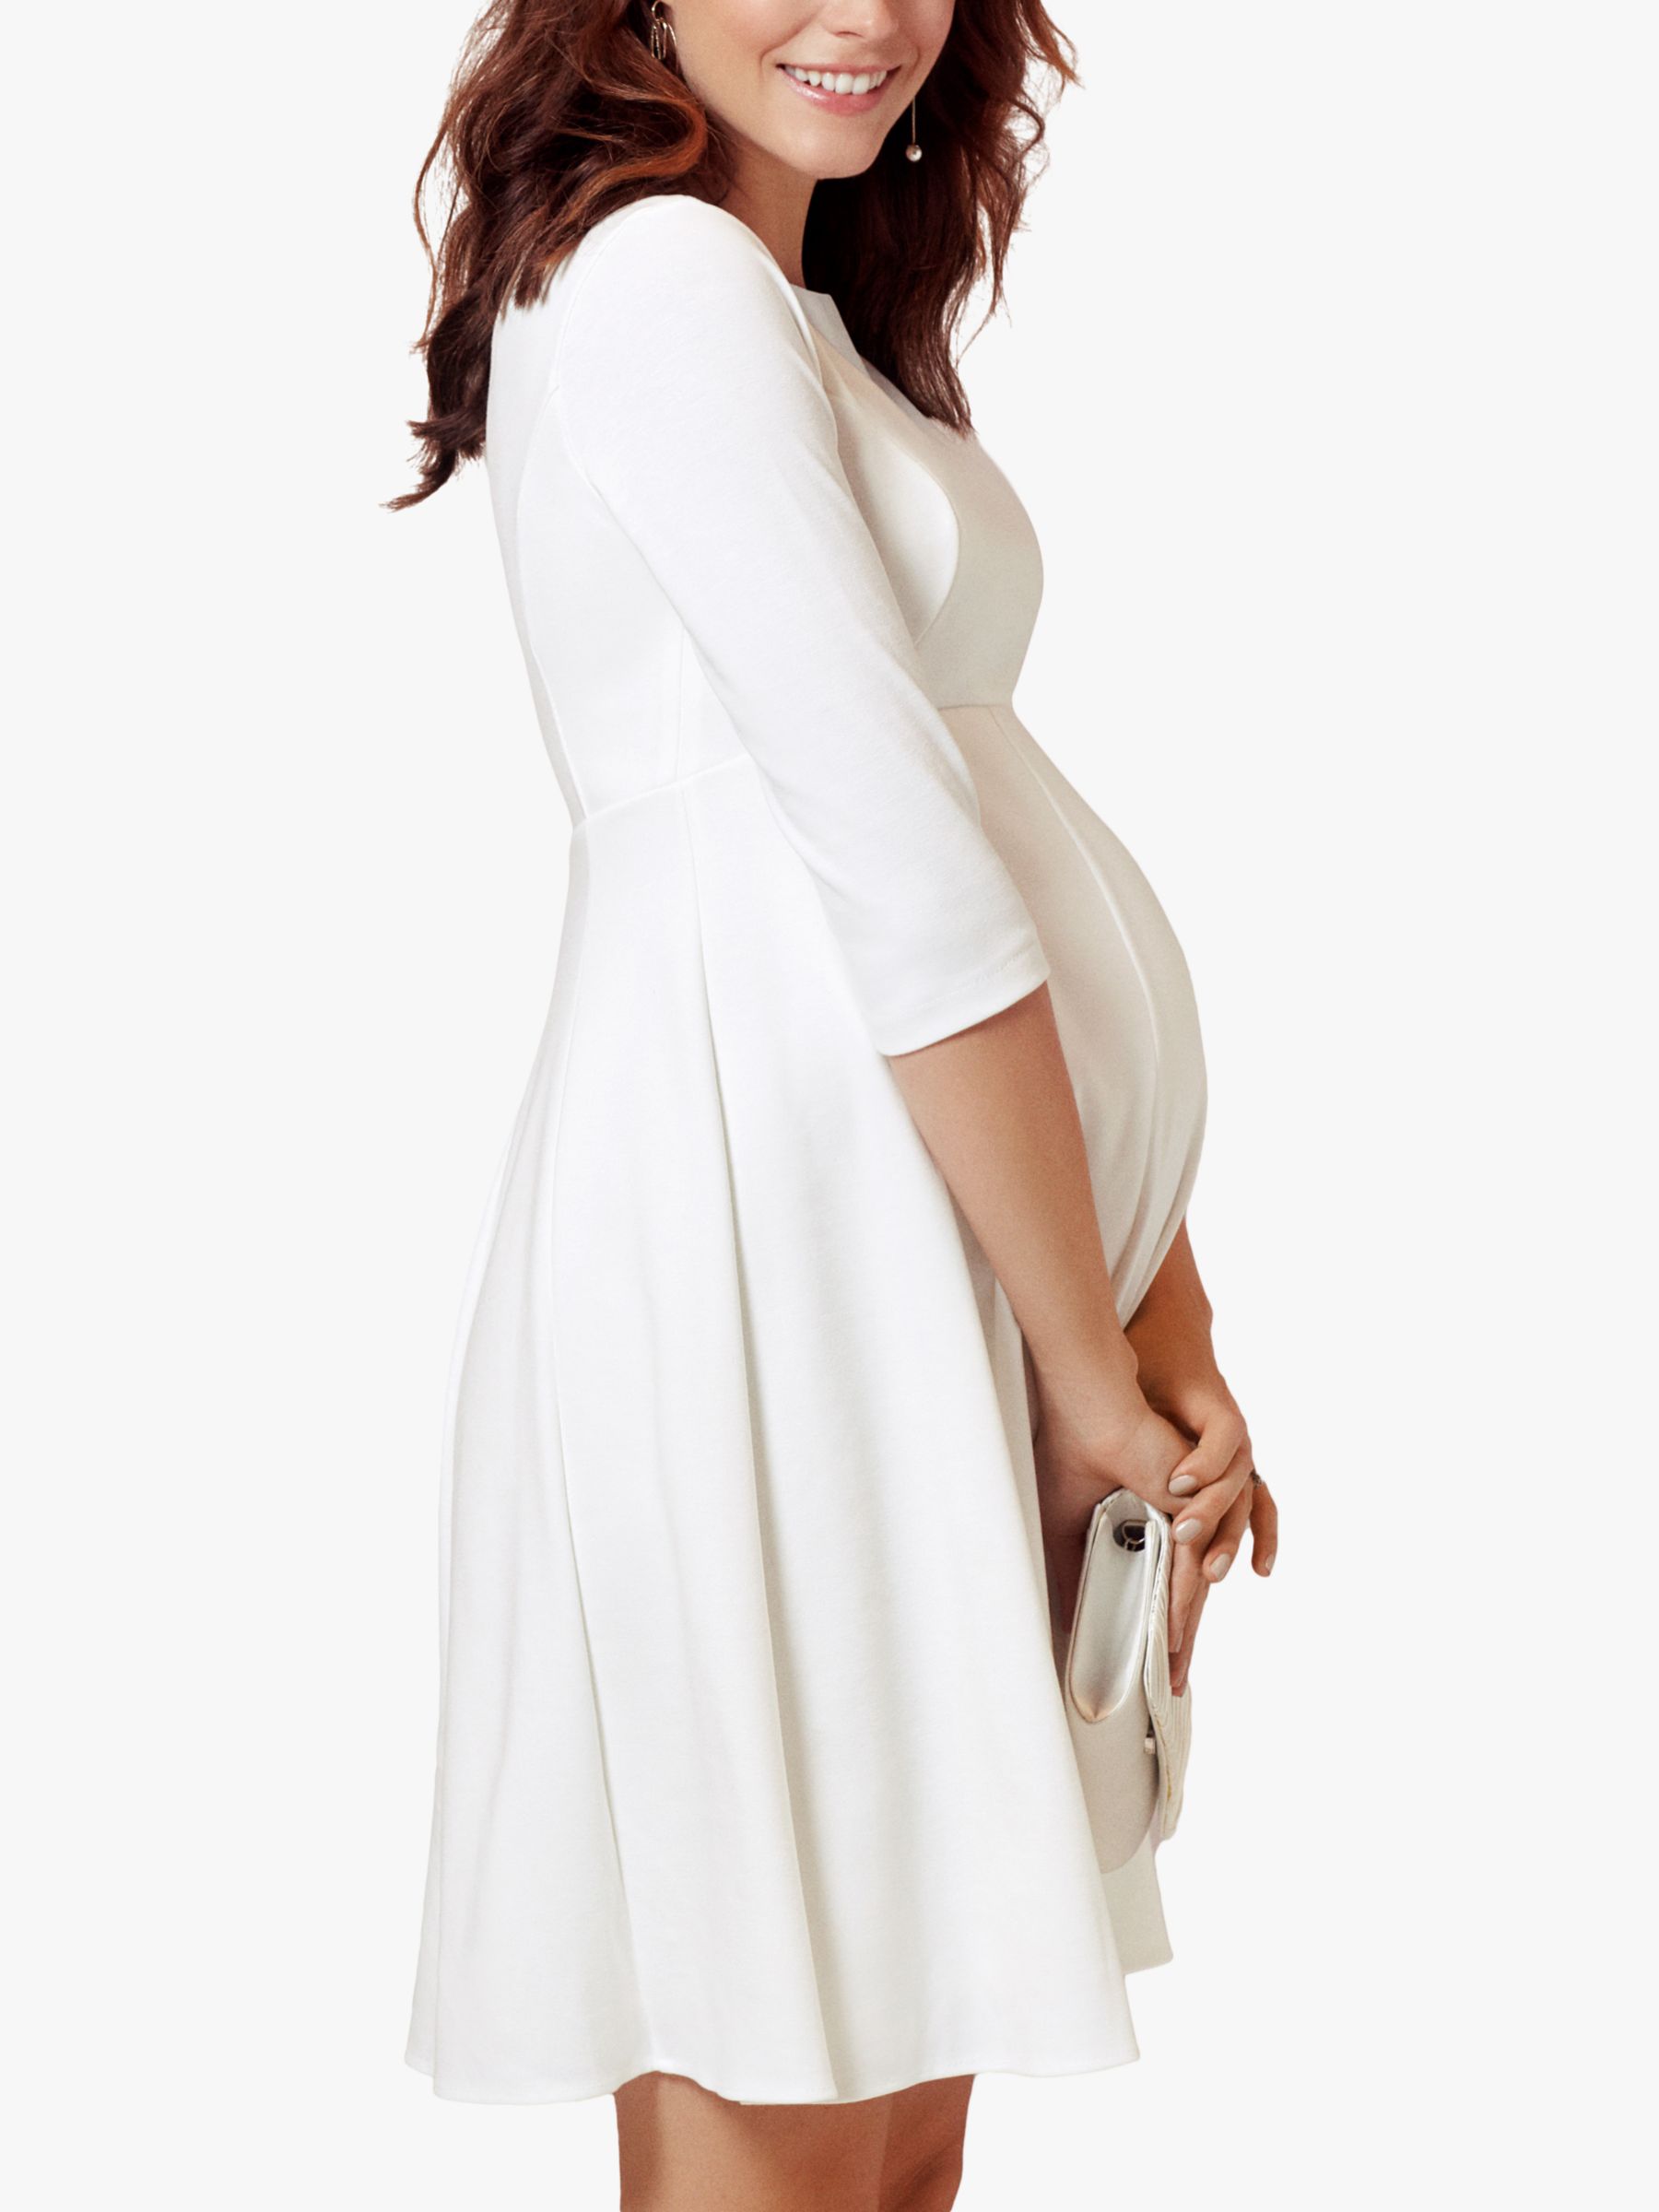 Tiffany Rose Sienna Maternity Dress, Cream, 6-8